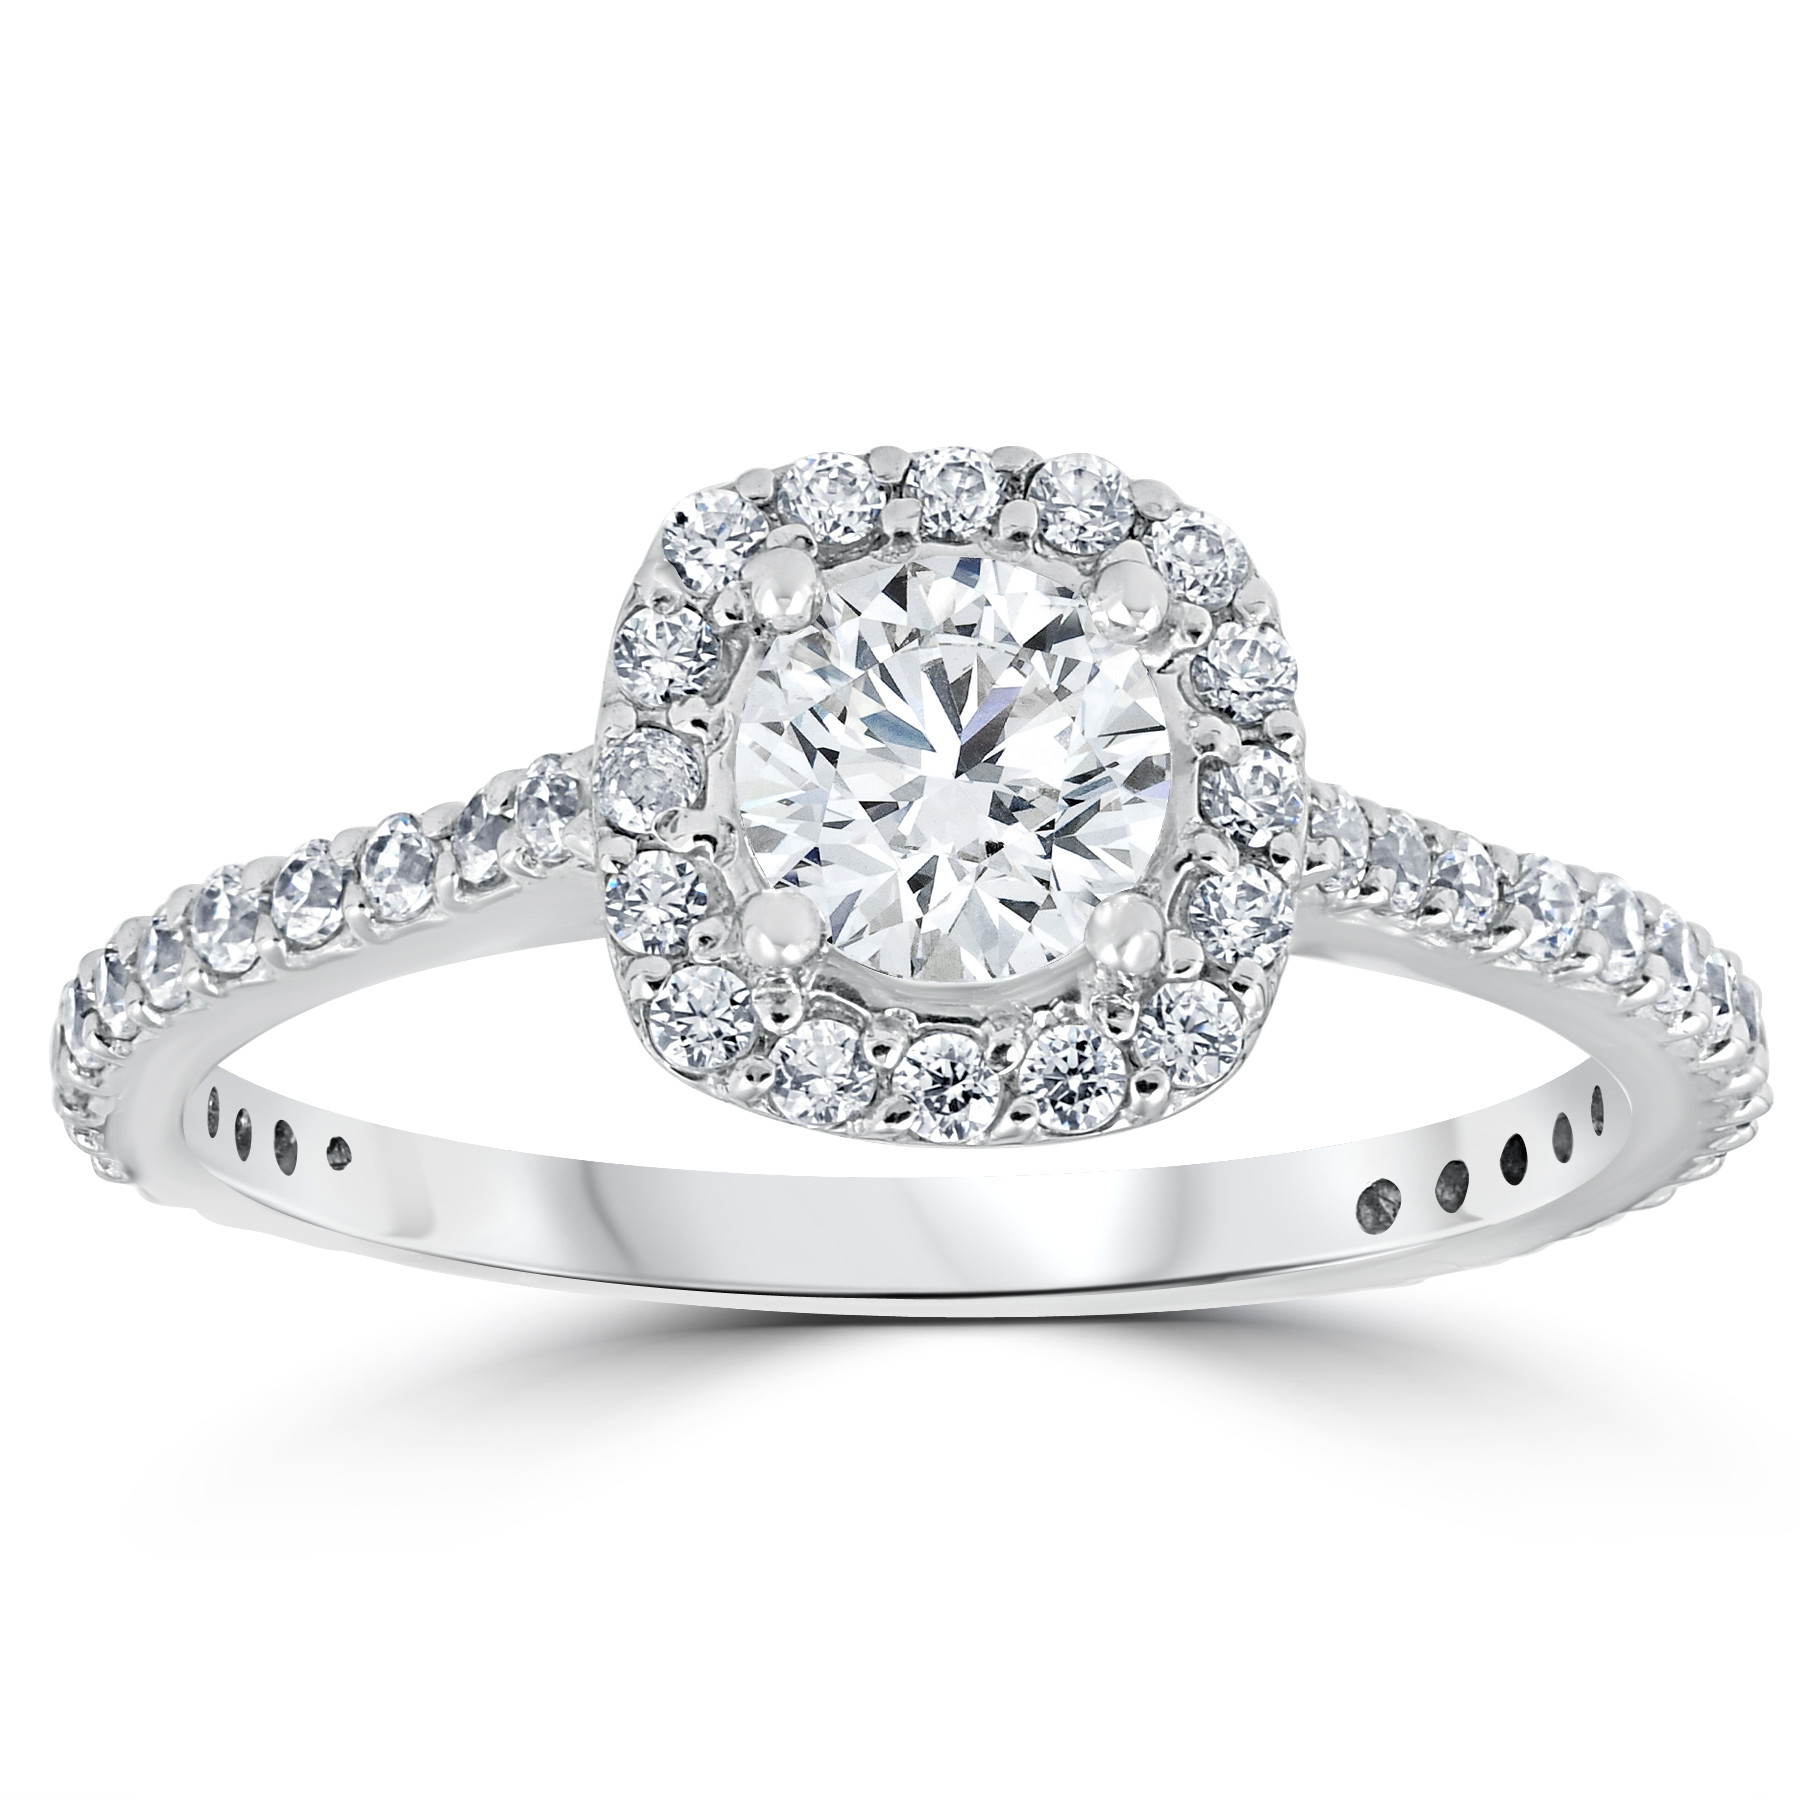 Round Diamond Wedding Rings
 1 1 5ct TDW Cushion Halo Round Diamond Engagement Ring 14k